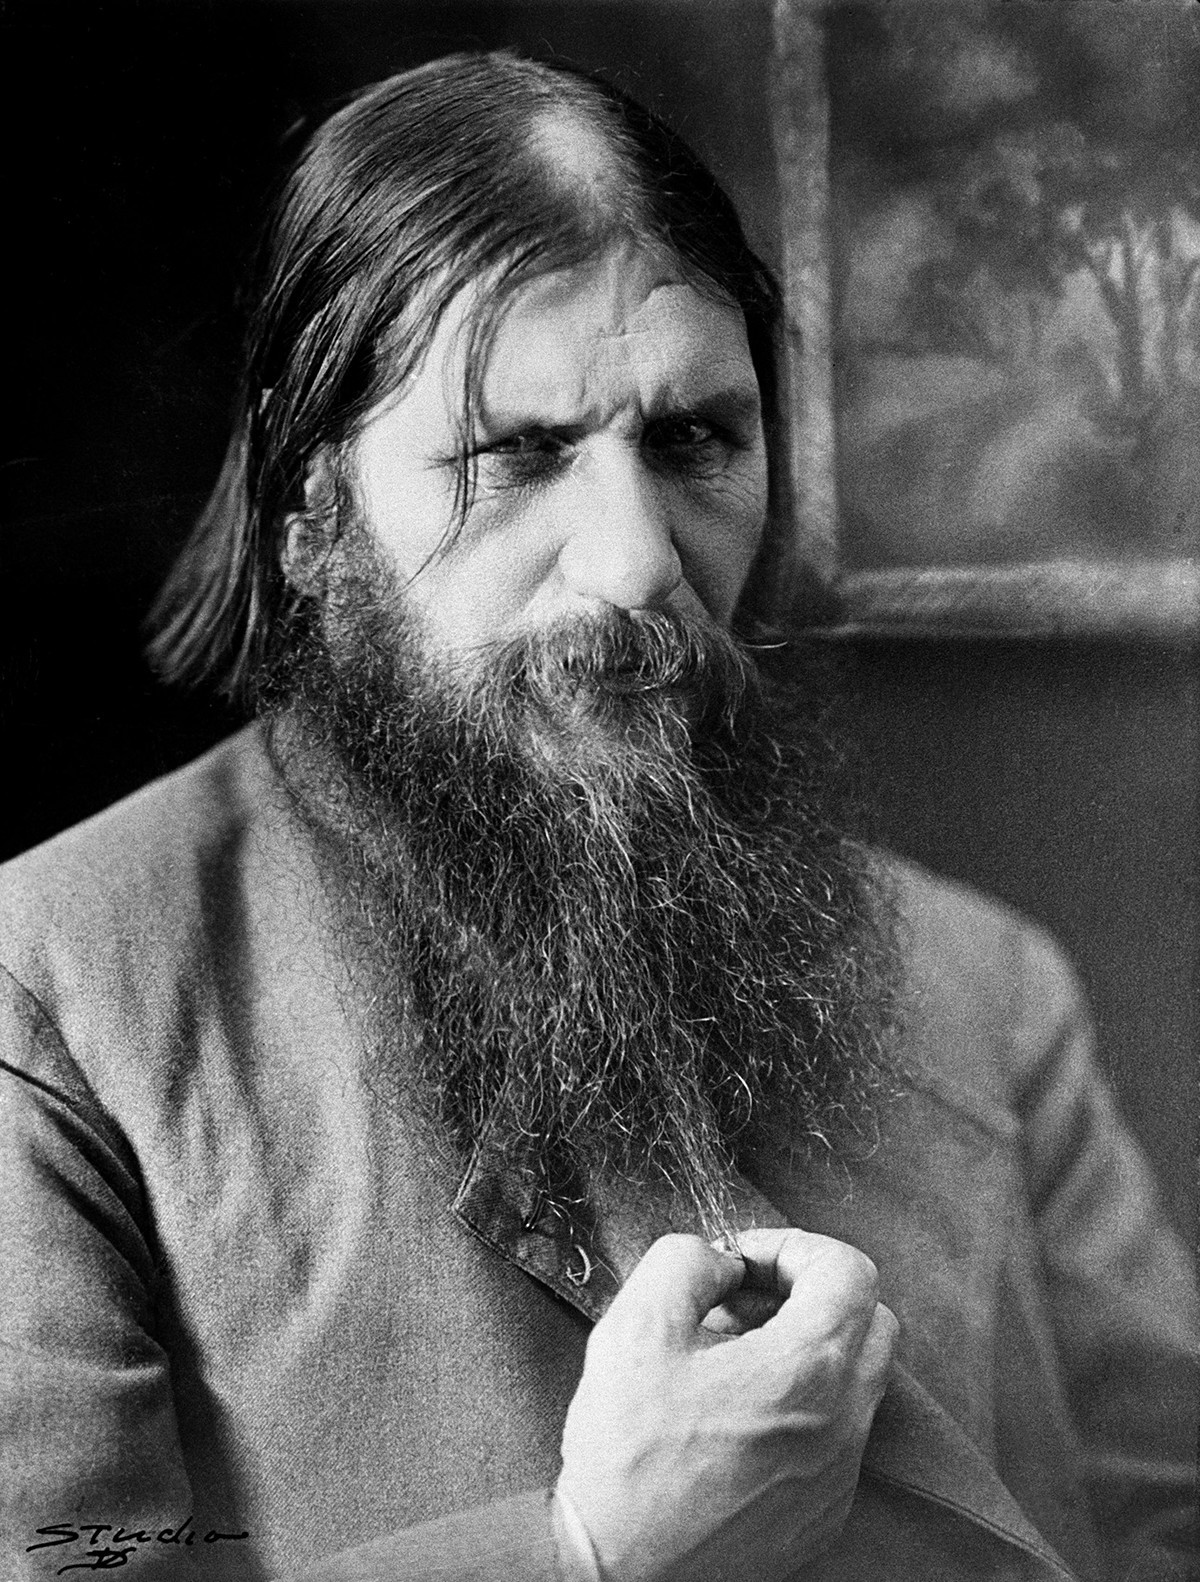 Grigori Rasputin

